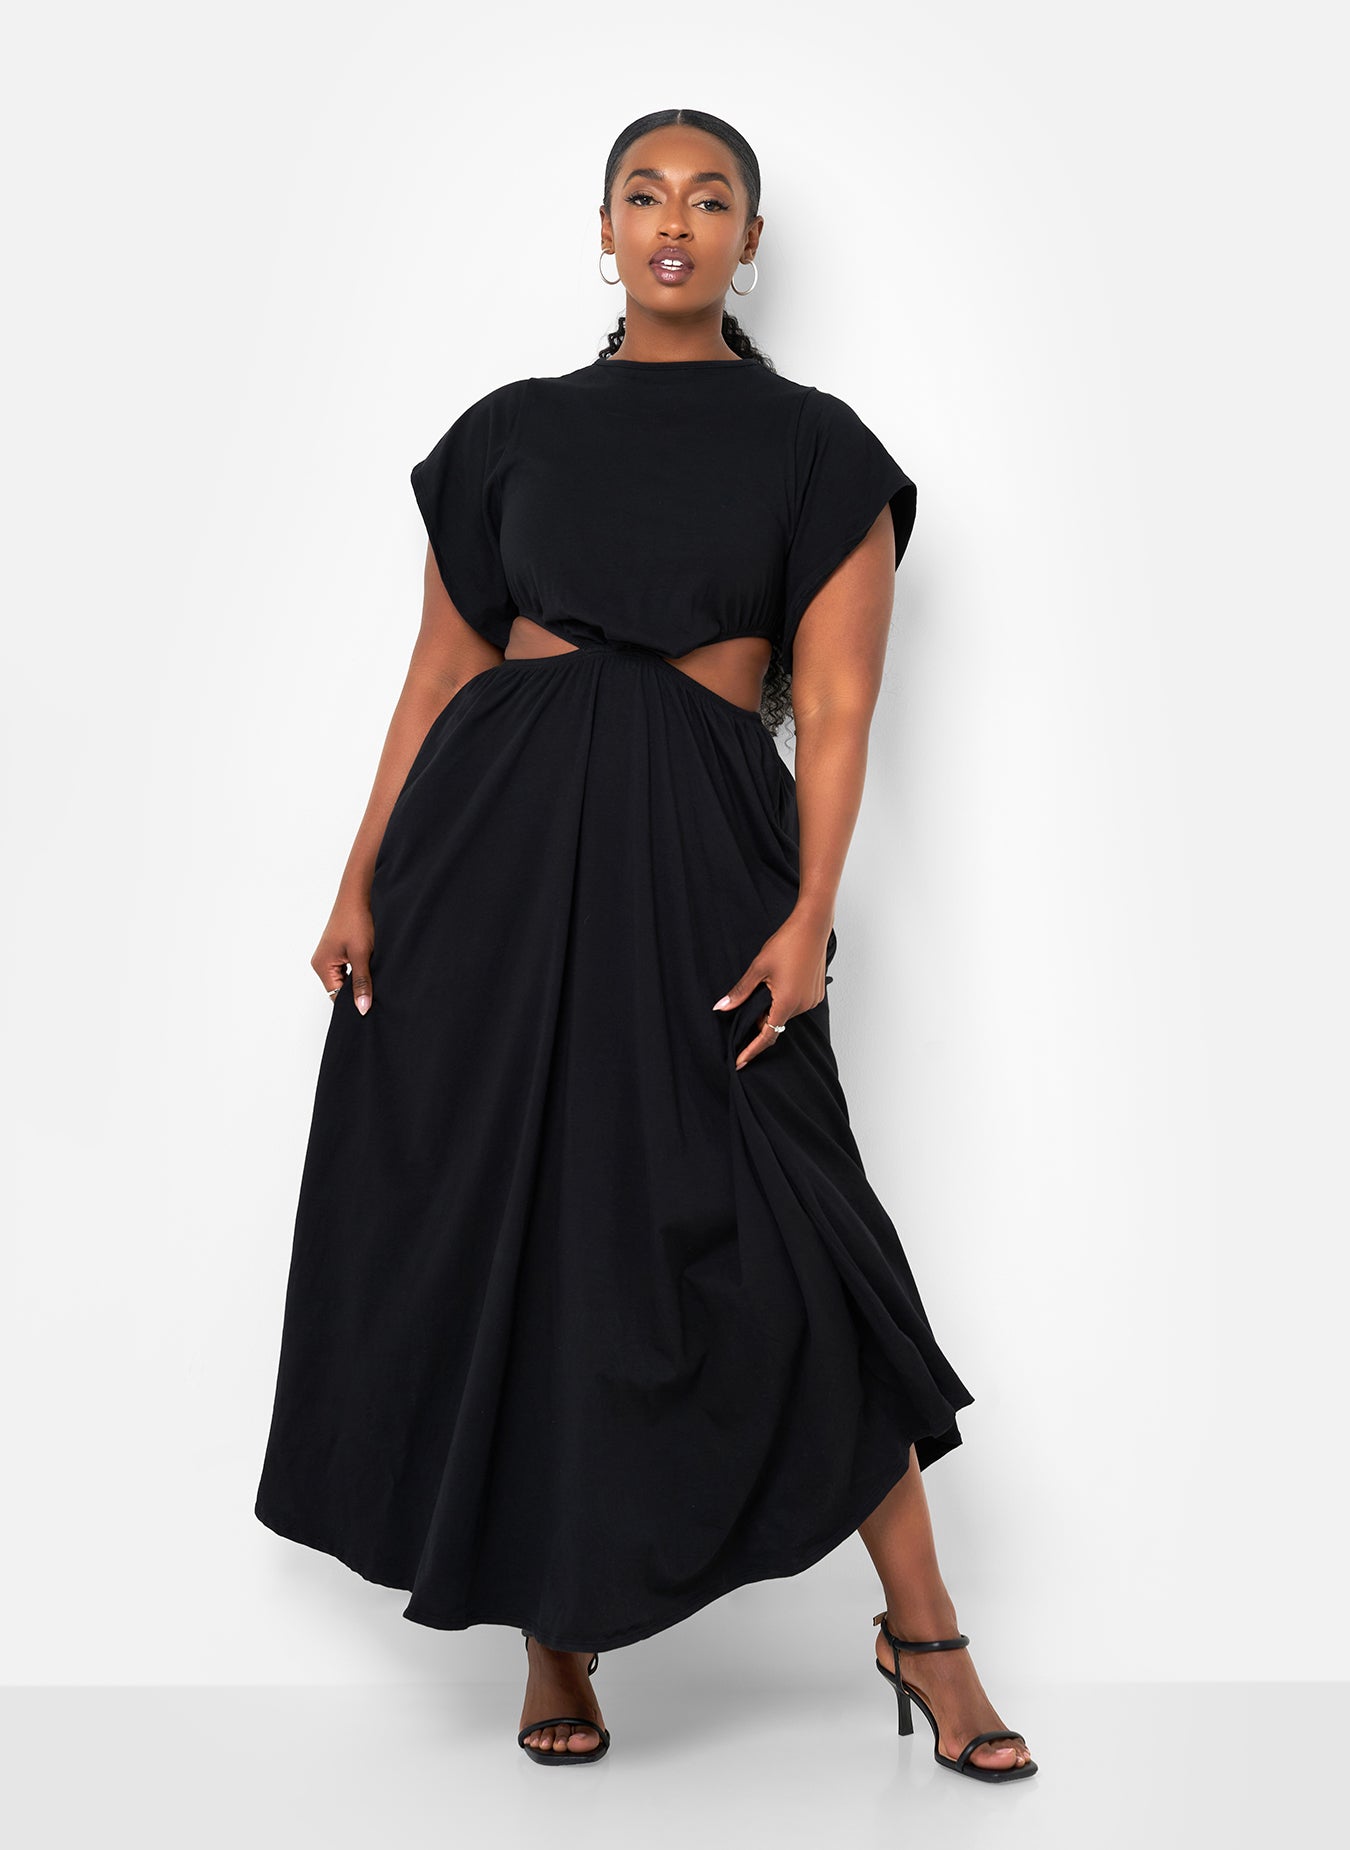 Womens Plus Size Mesh Geometric Patterned Long Sleeve Bodysuit, Black, Size  3X - Yahoo Shopping